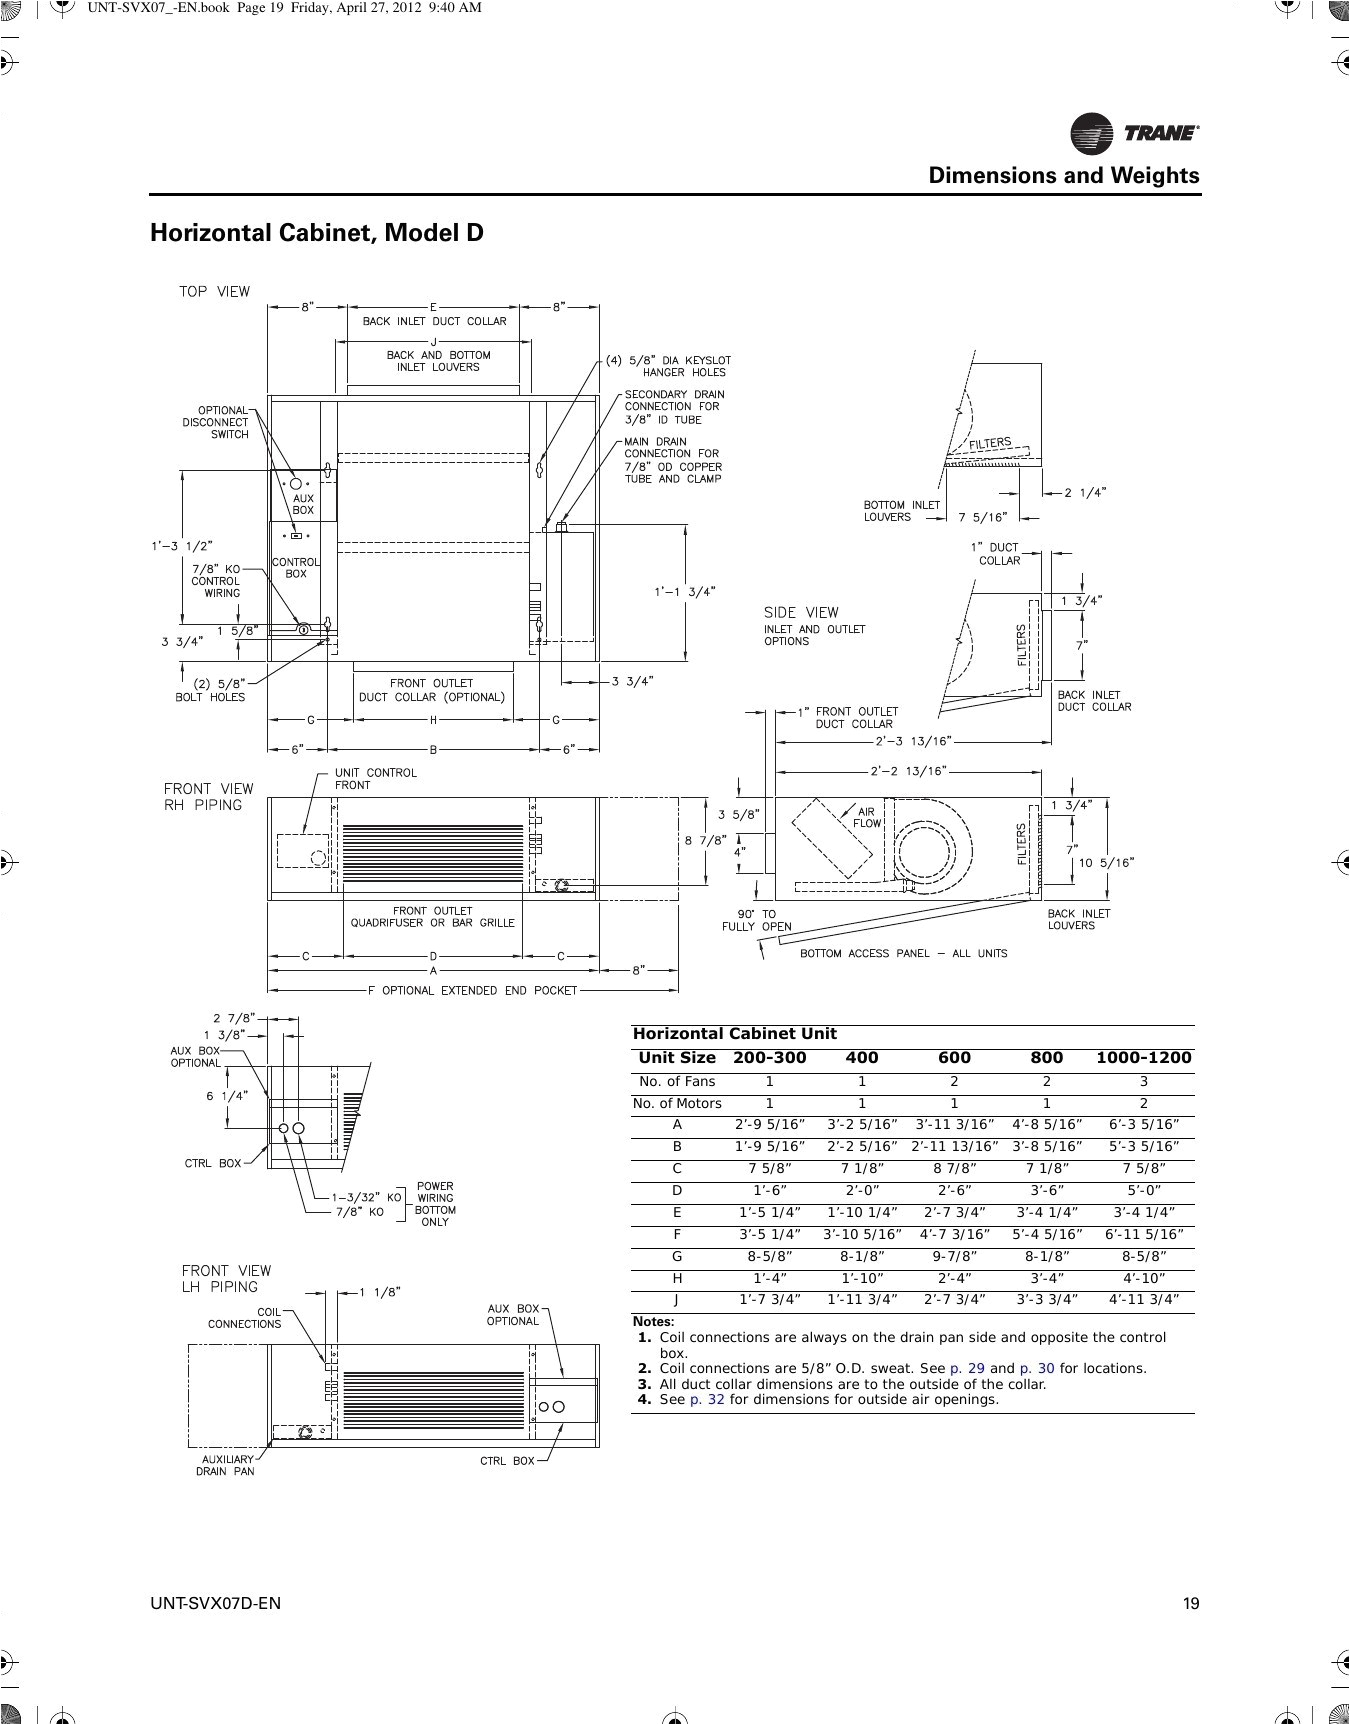 trane heat pump wiring diagram